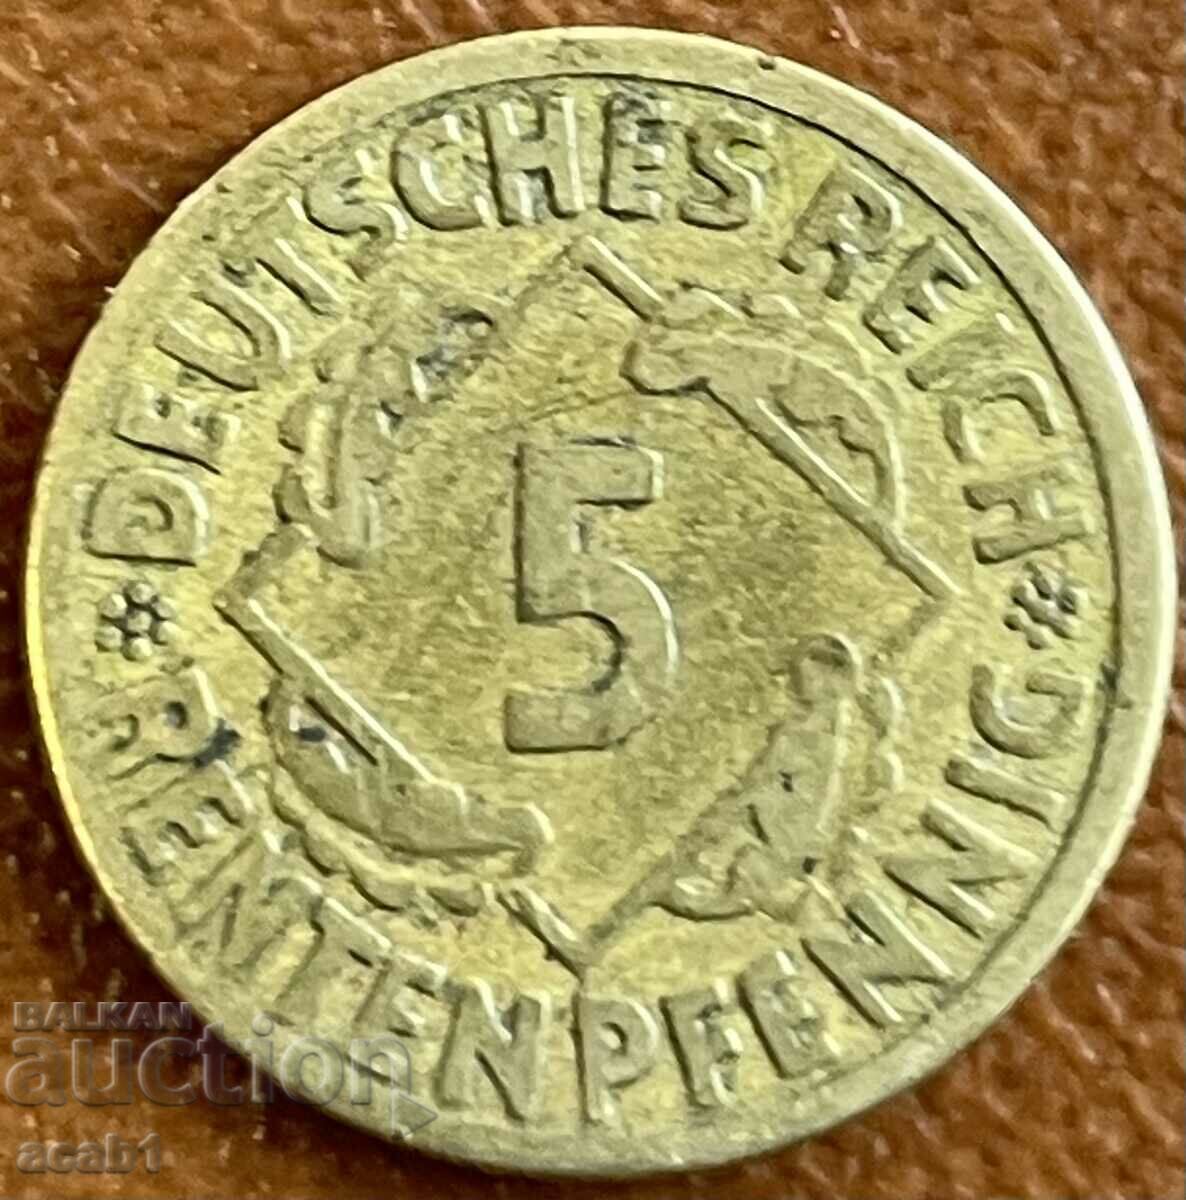 5 Ενοίκια pfennig Deutsches Reich